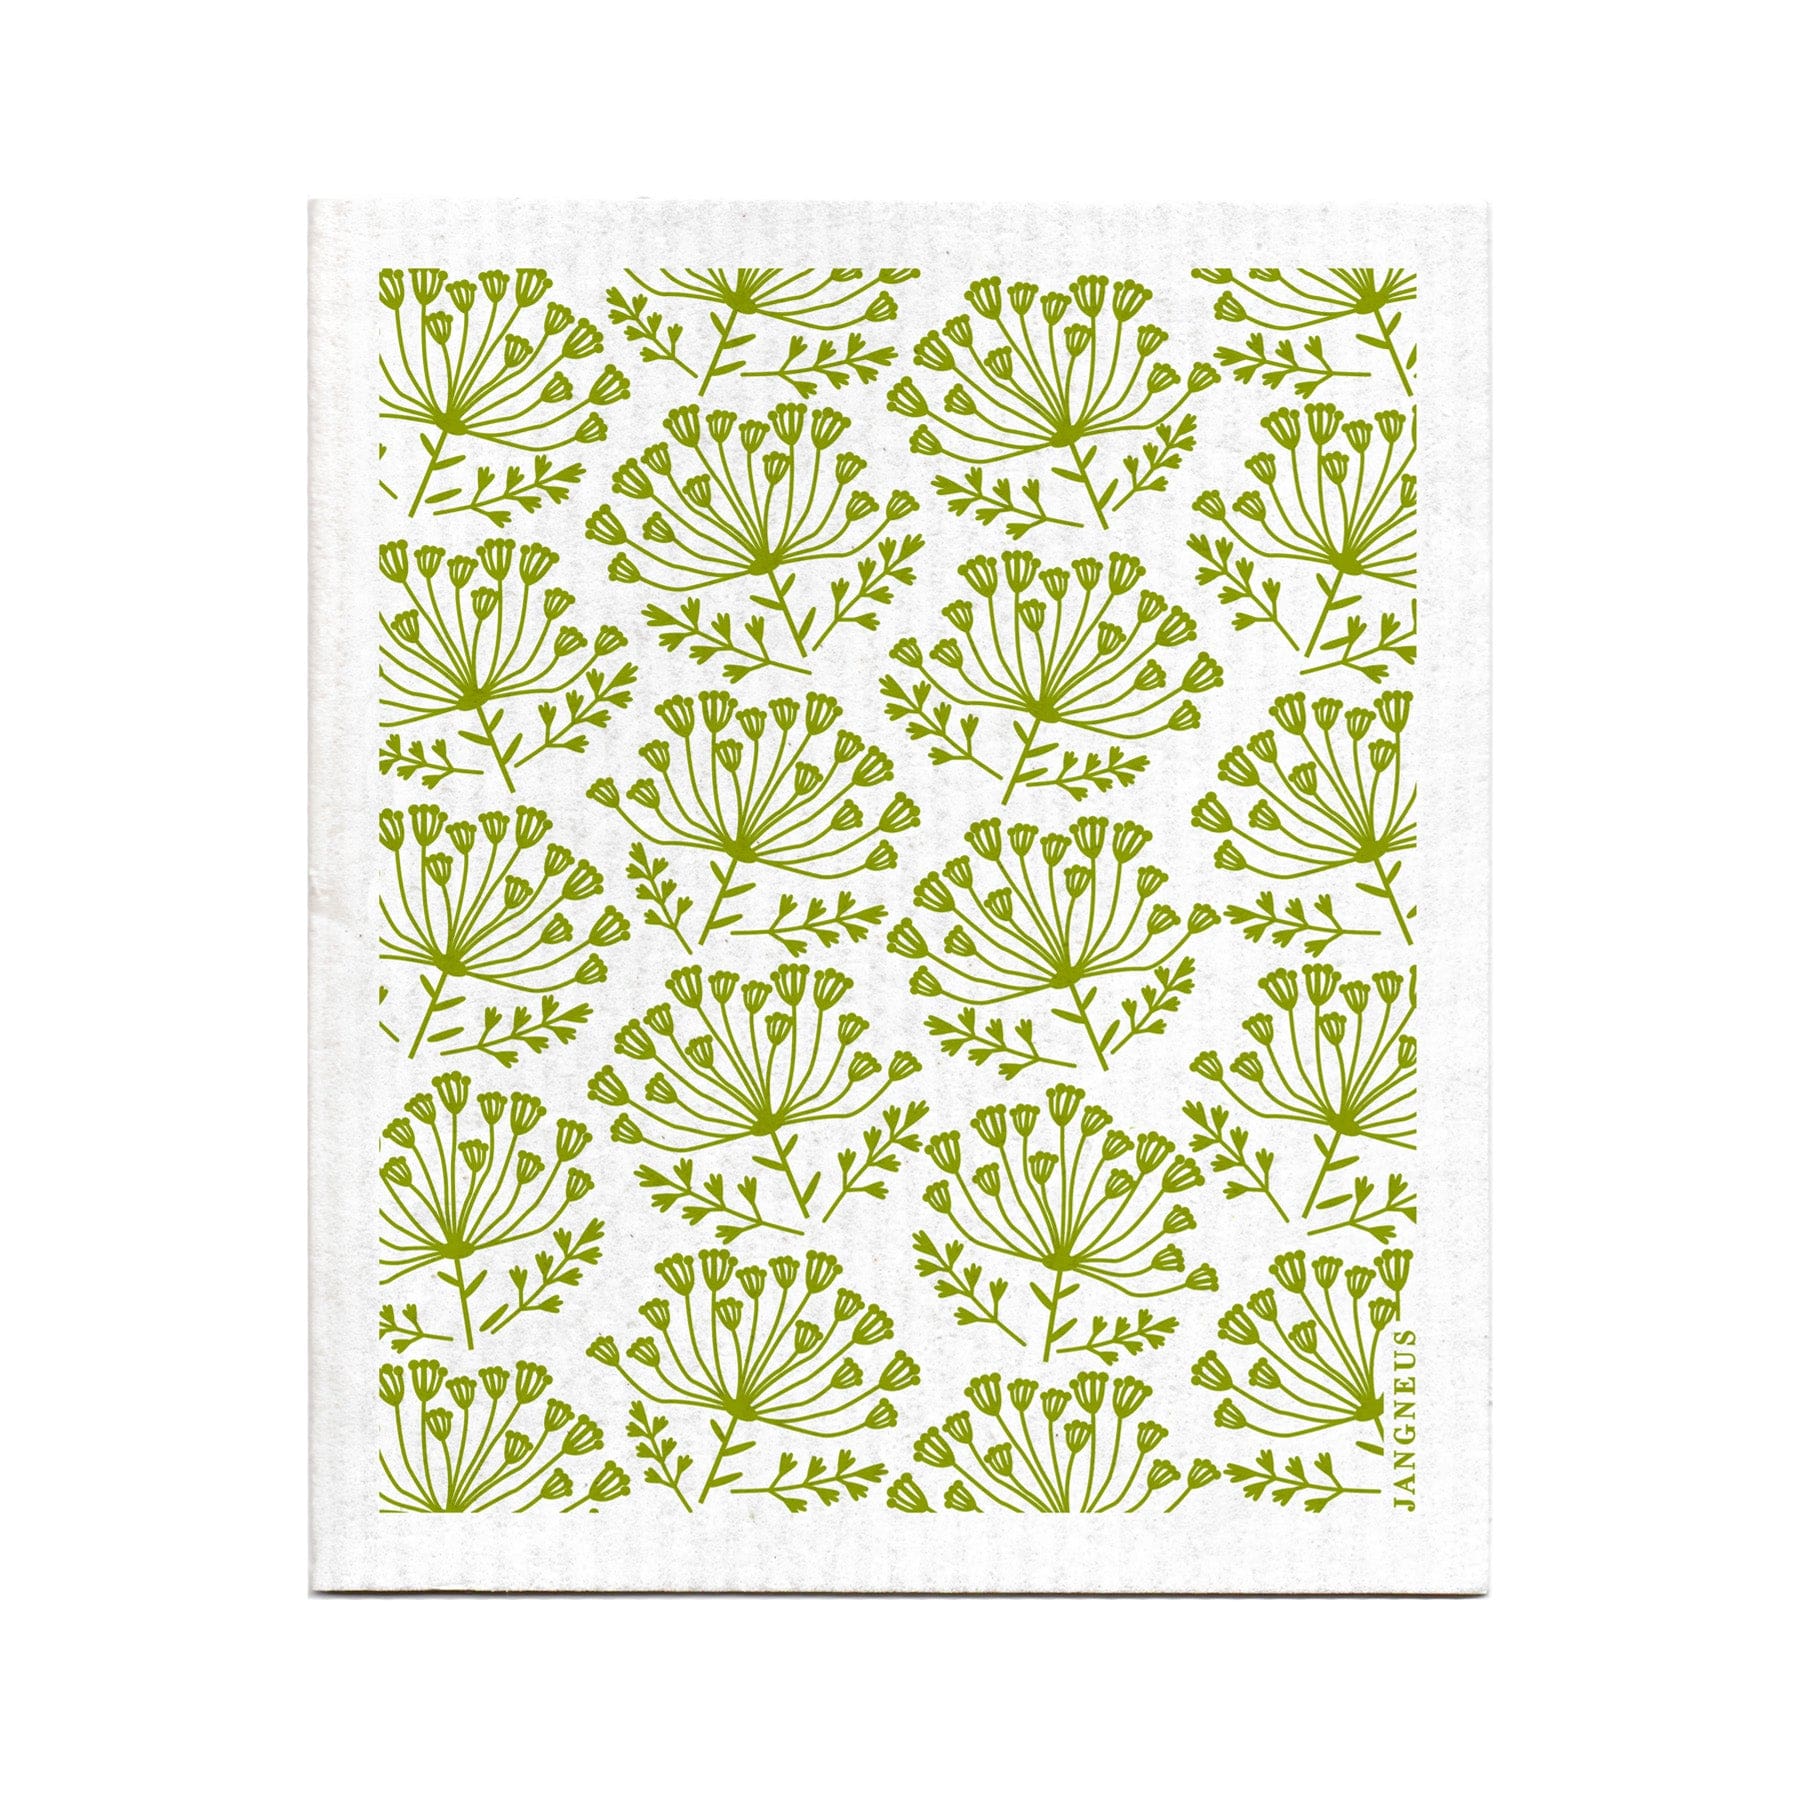 Biodegradable dishcloth - green dill